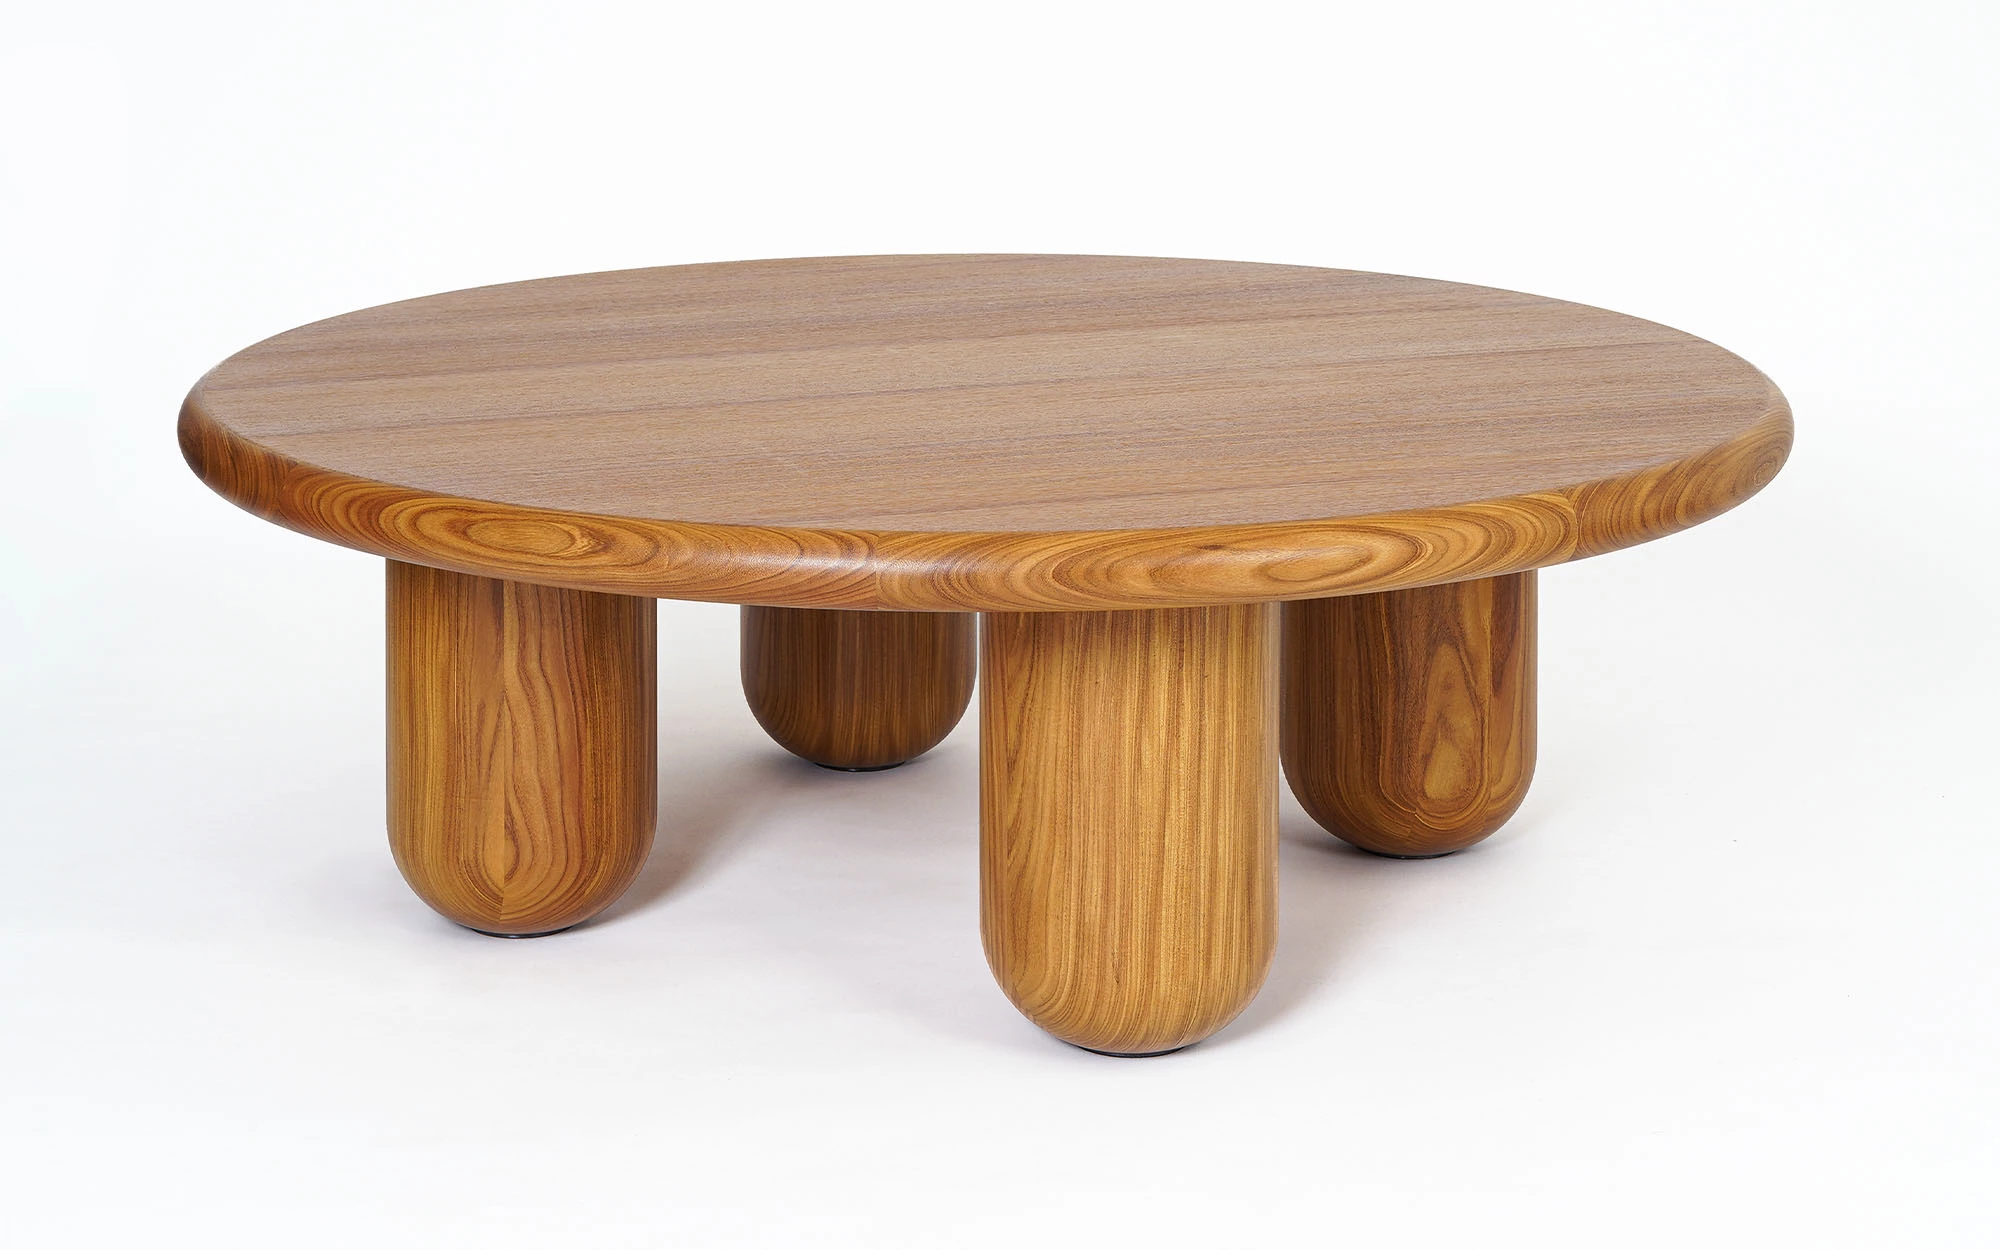 Organism coffee table - Jaime Hayon - Design Miami / Basel 2021.